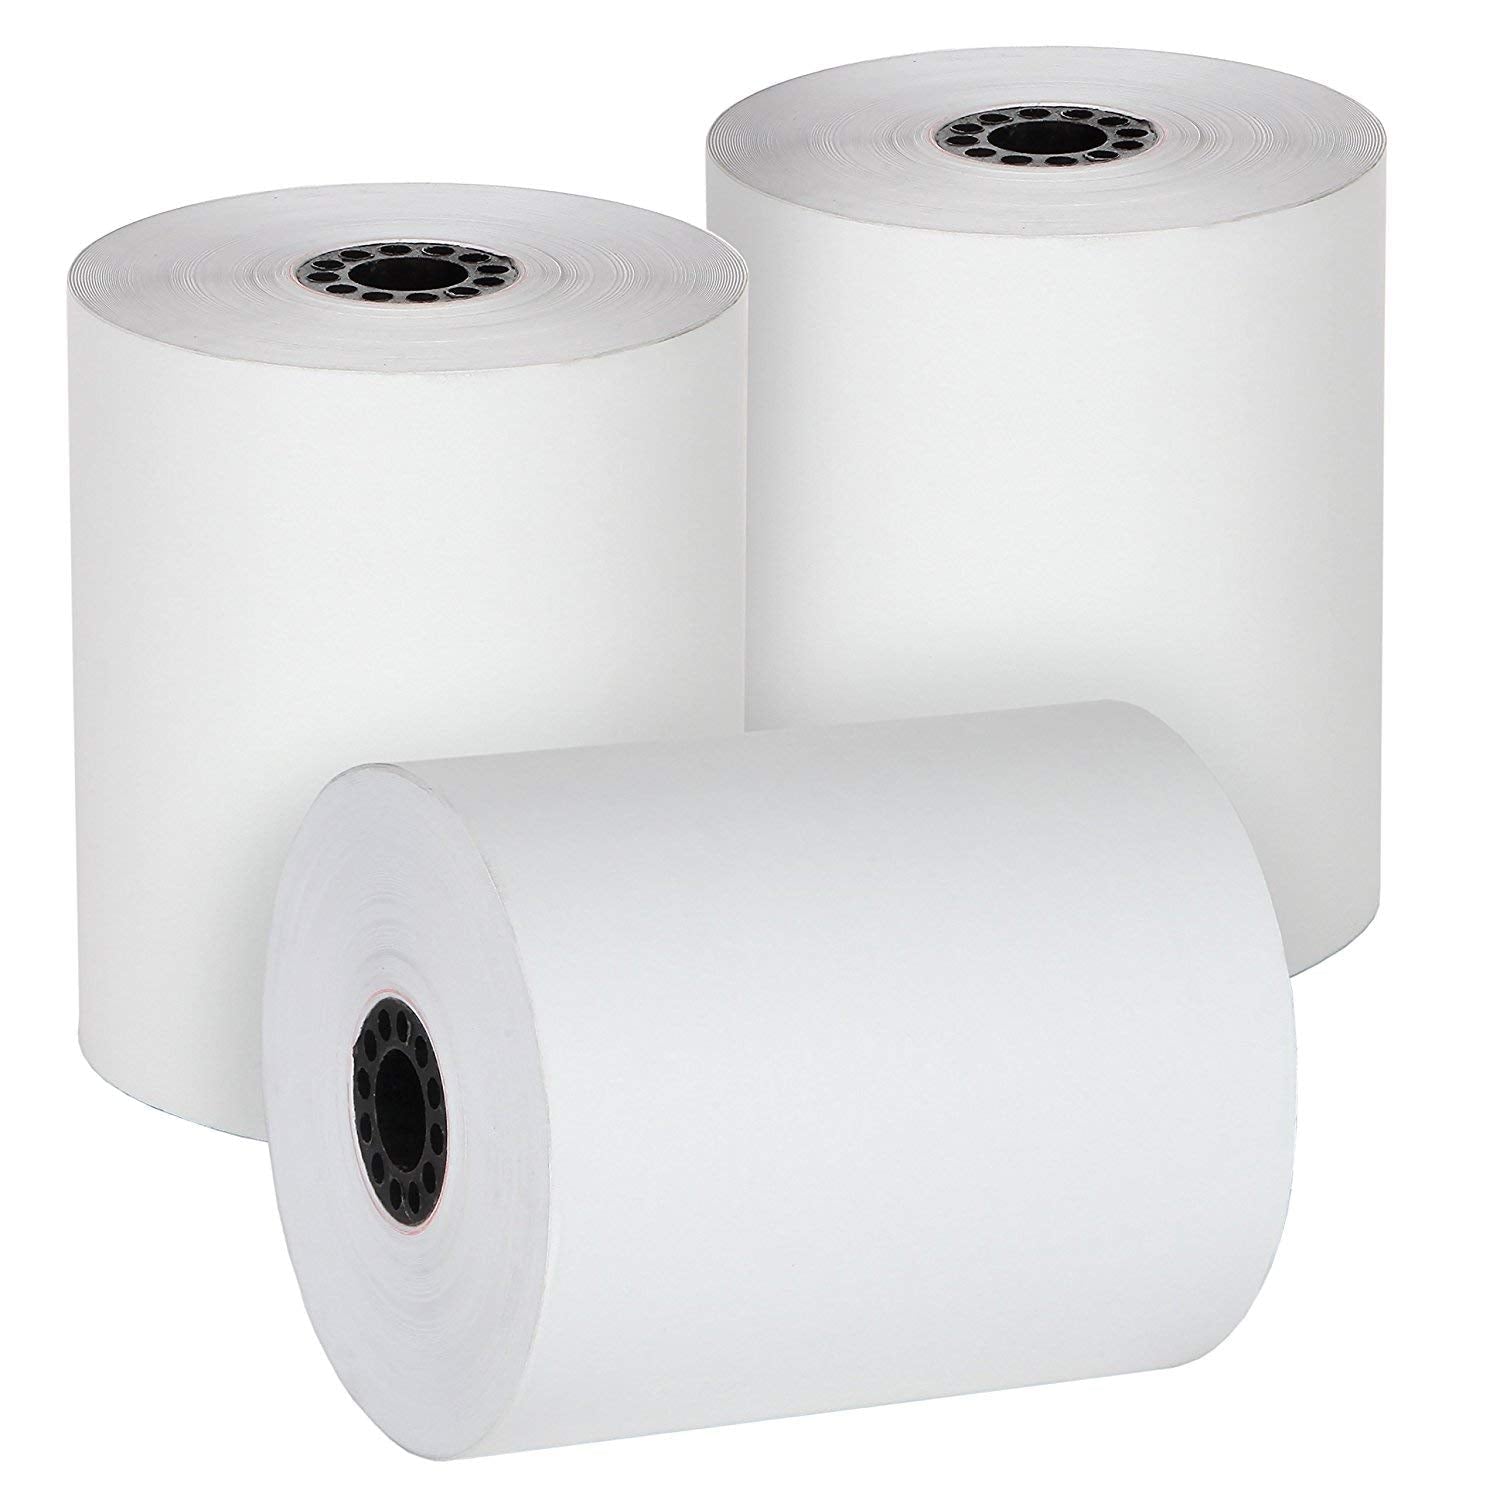 Cashier Depot Thermal Paper Rolls 2 1/4" X 50', Premium White, 50 Rolls - Cashier Depot